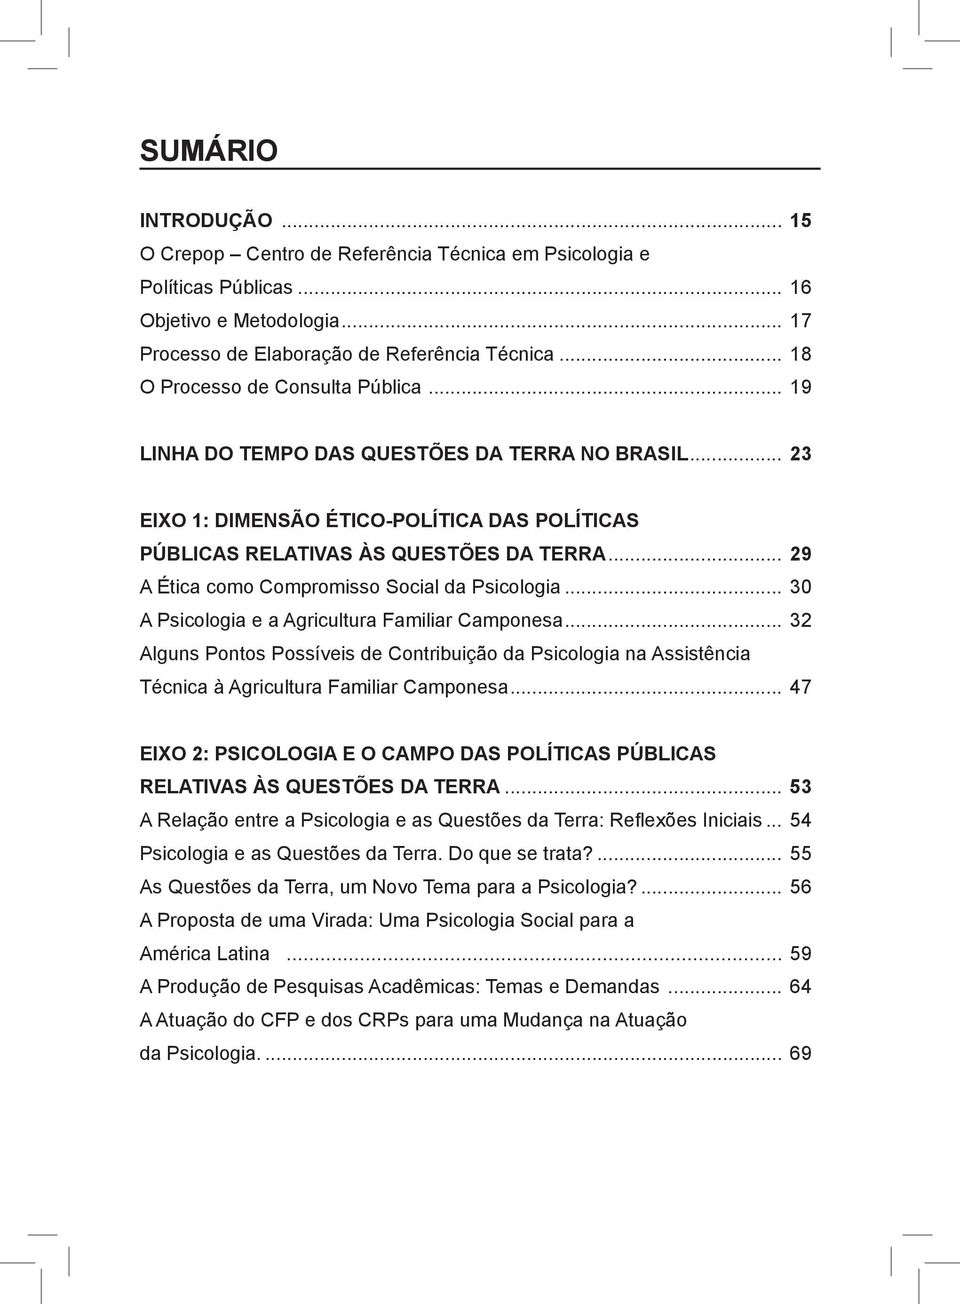 .. 29 A Ética como Compromisso Social da Psicologia... 30 A Psicologia e a Agricultura Familiar Camponesa.